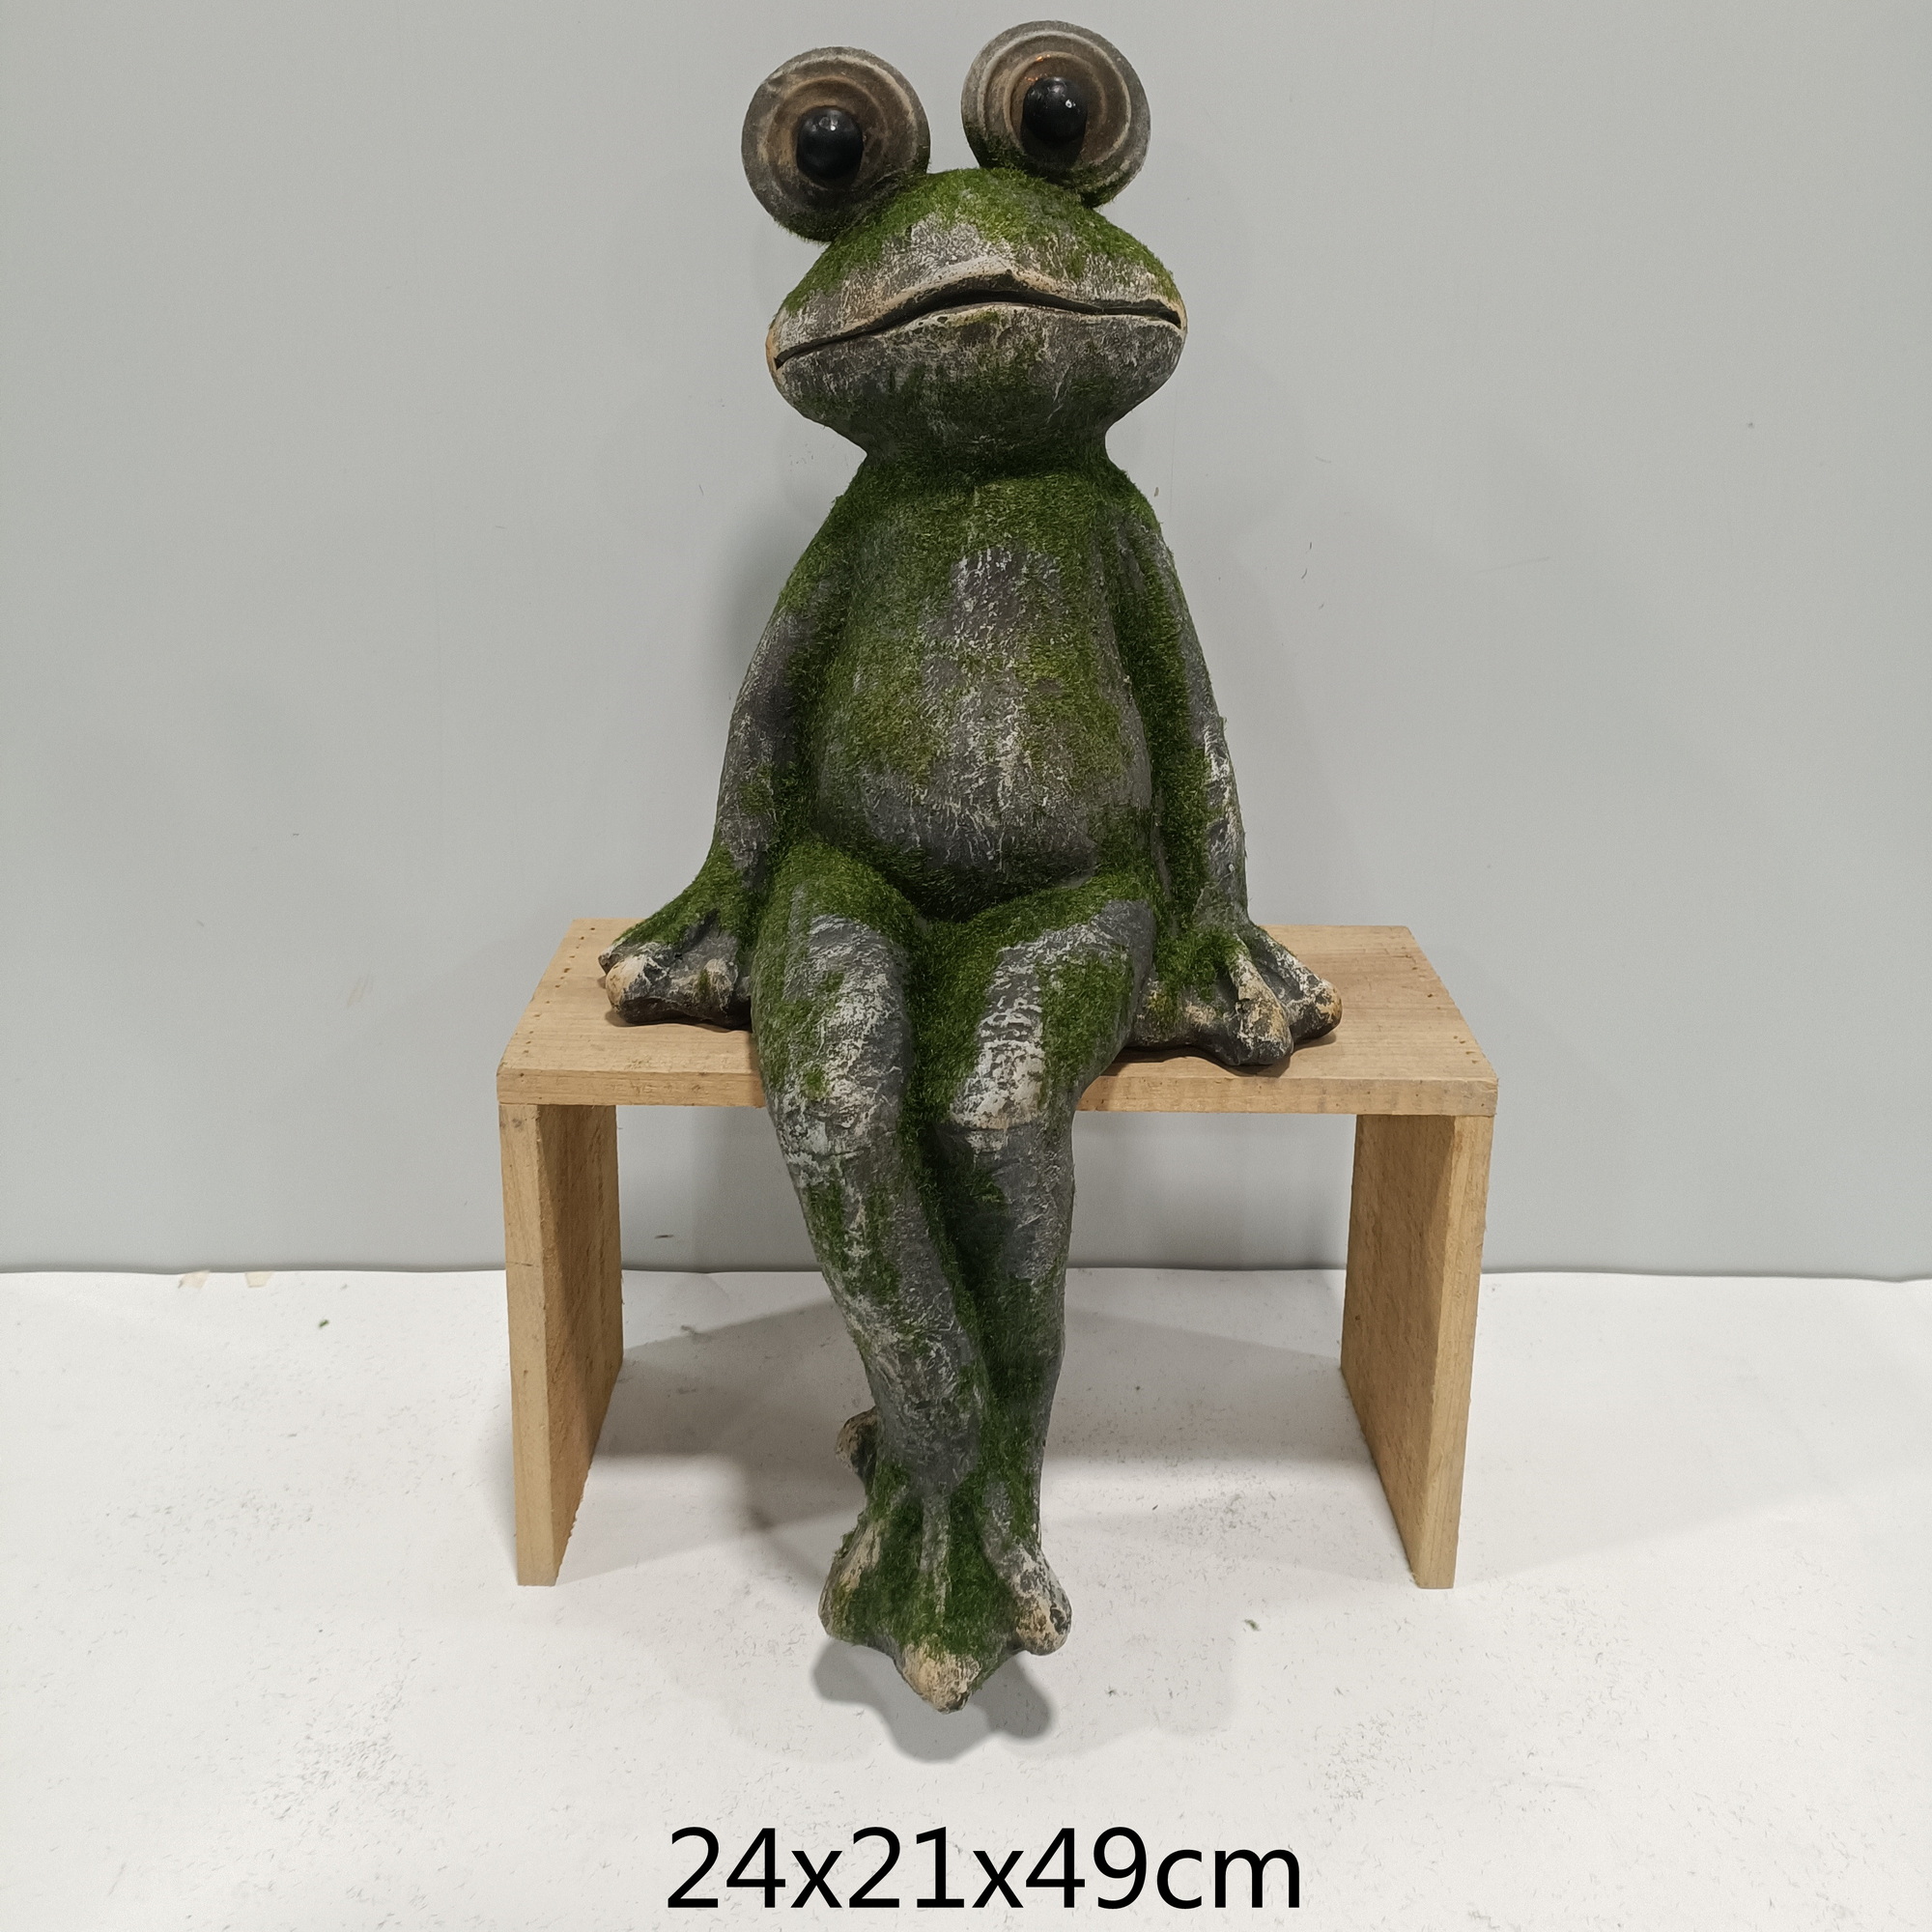 Abstract Frog Garden Sculpture Statues